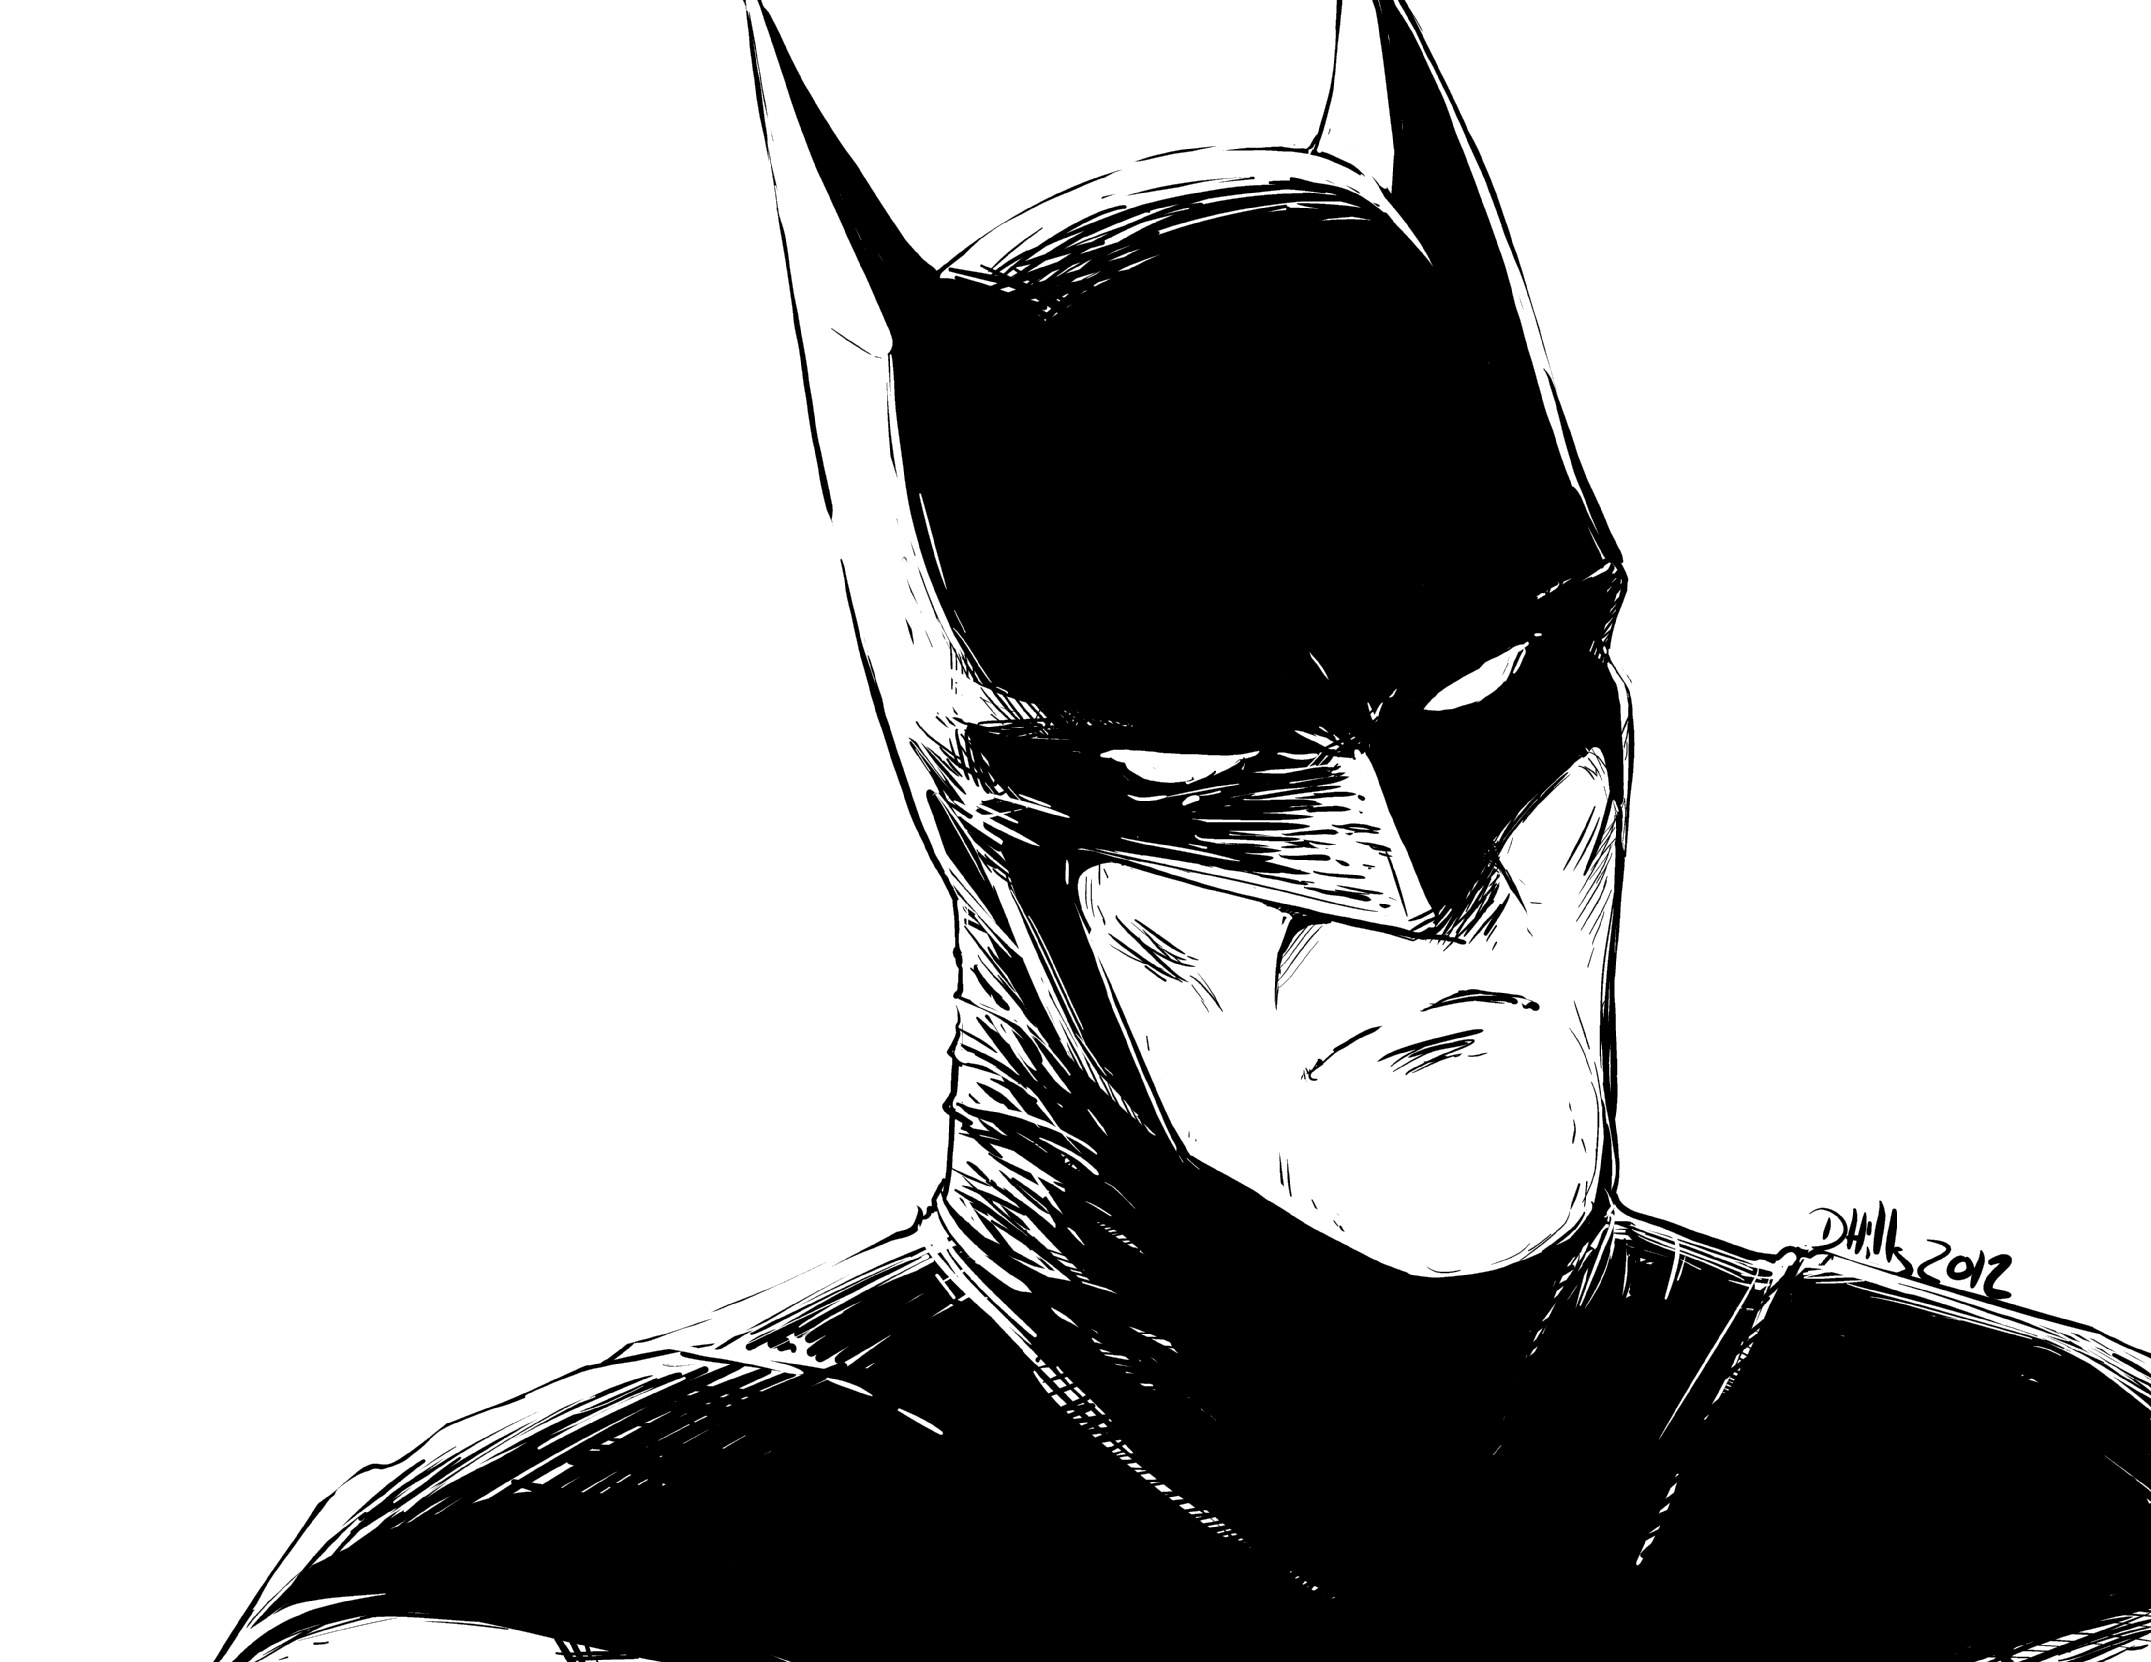 http://www.pnhcomics.com/wp-content/uploads/2012/03/Batman.jpg